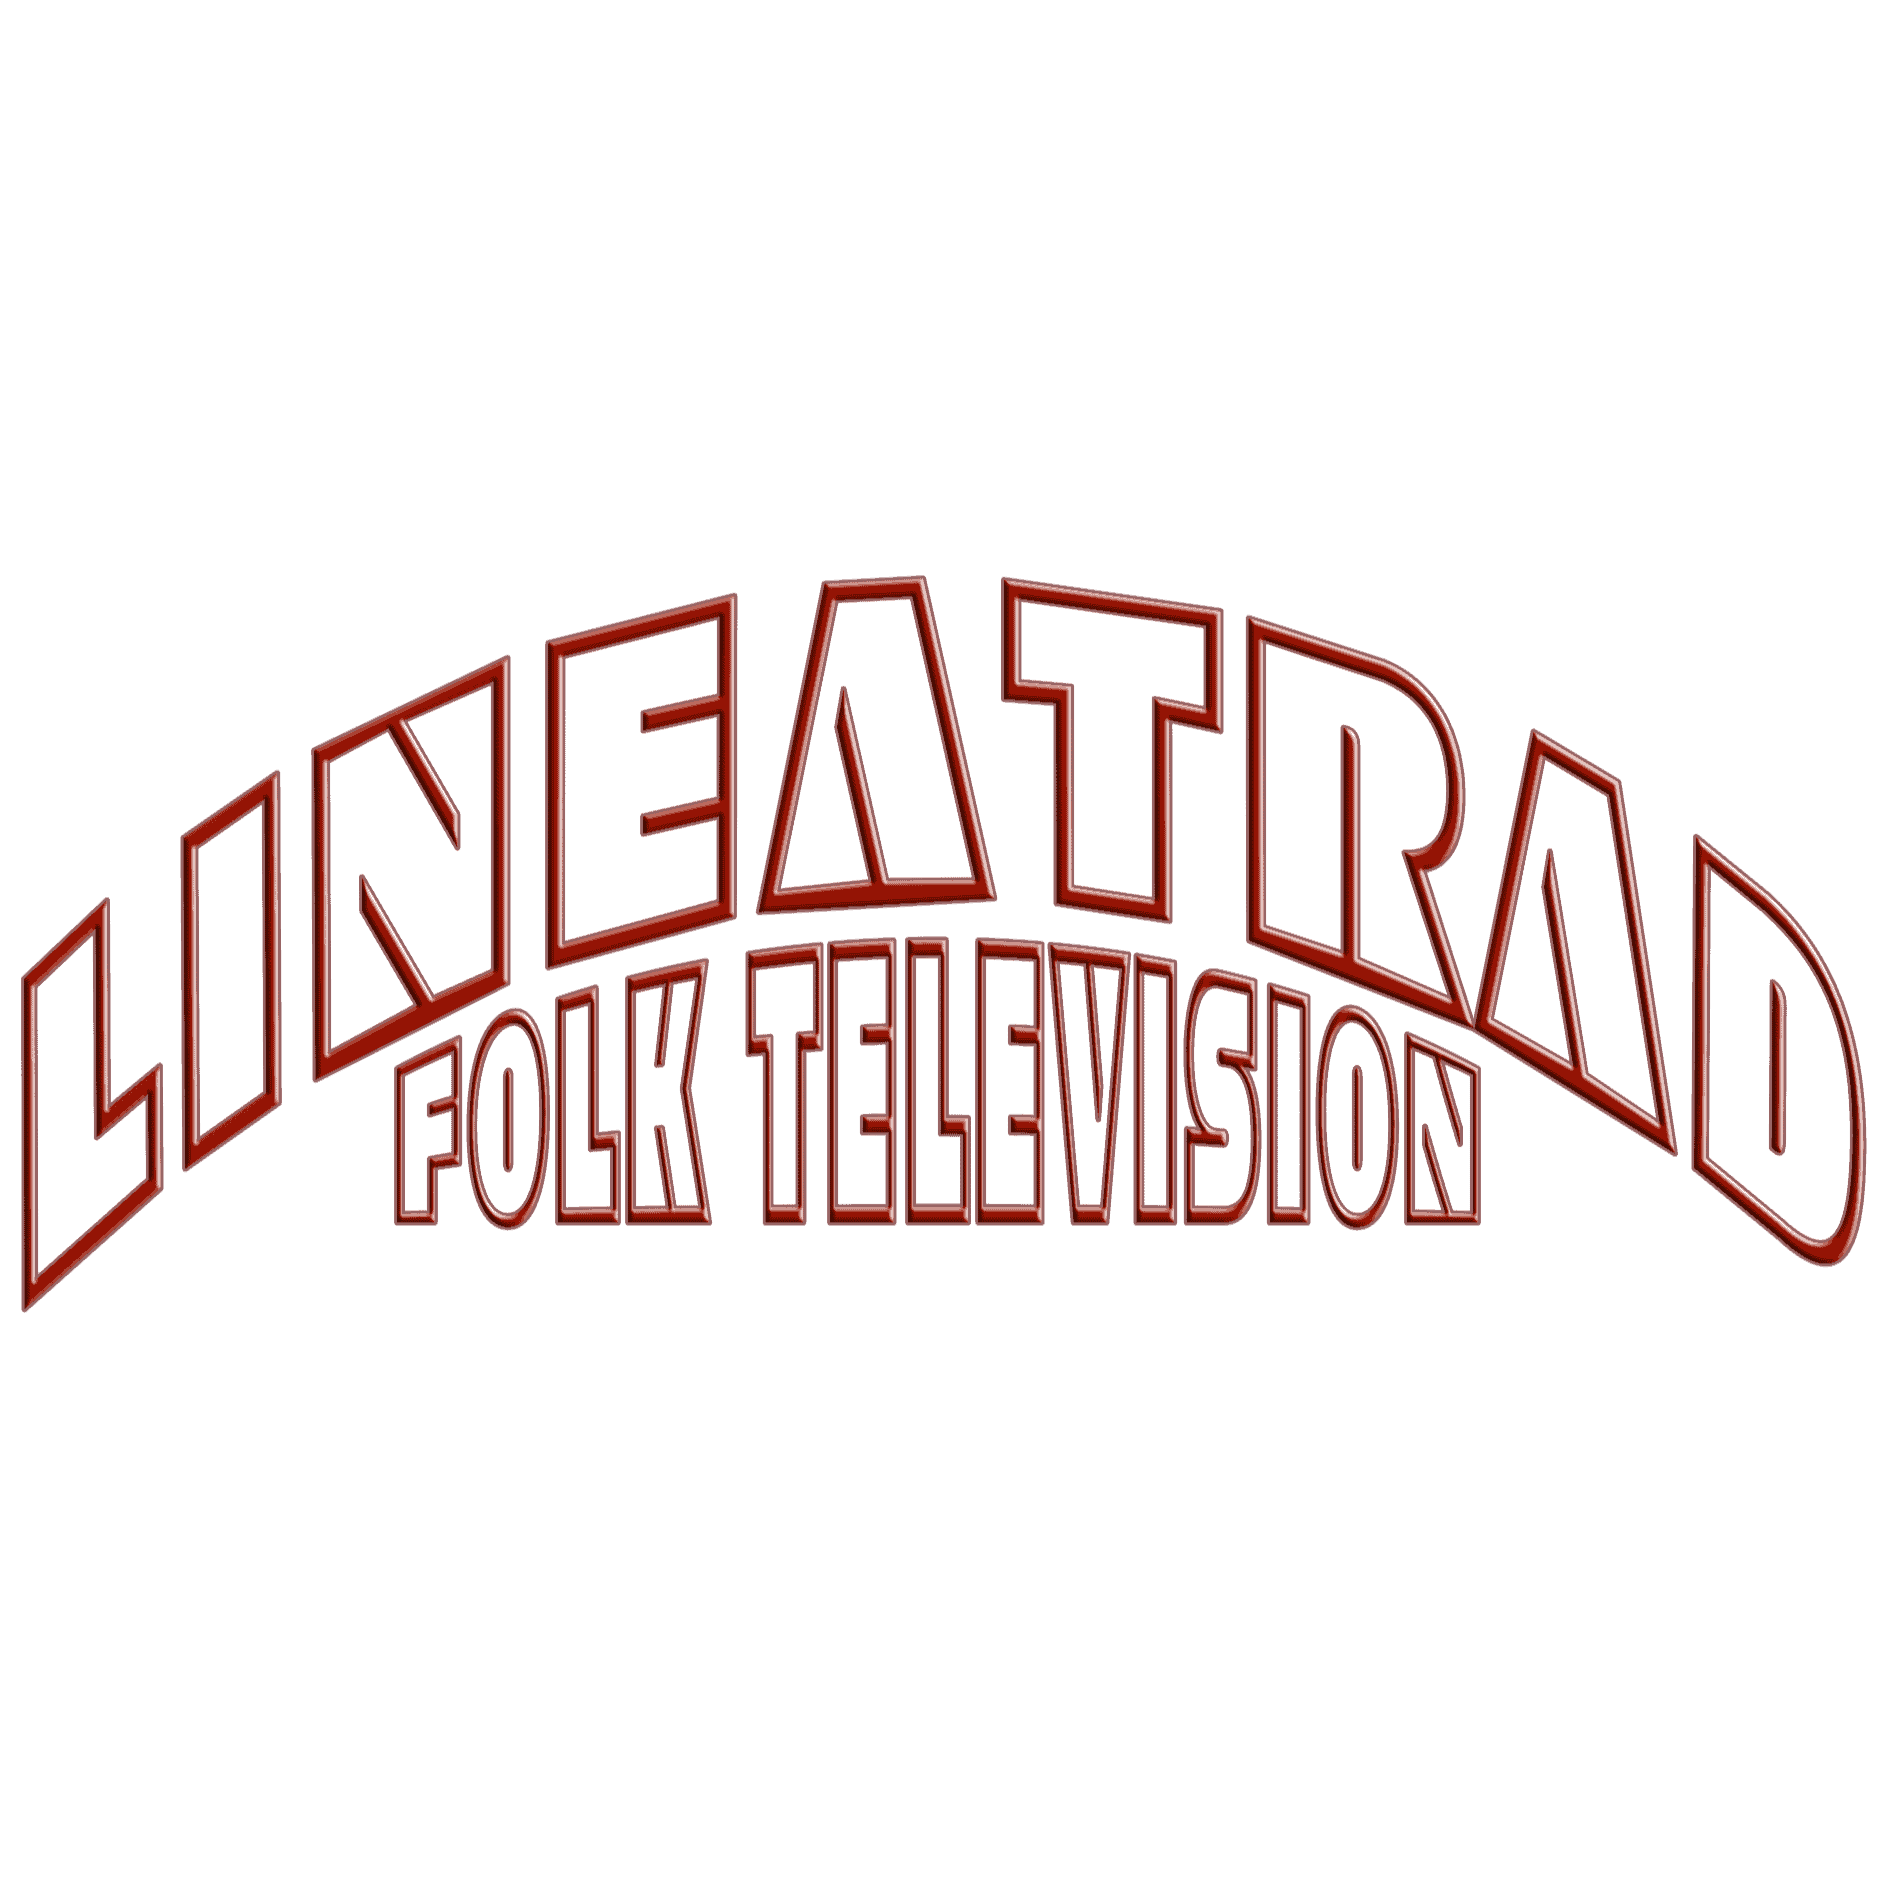 Lineatrad Folk Televison